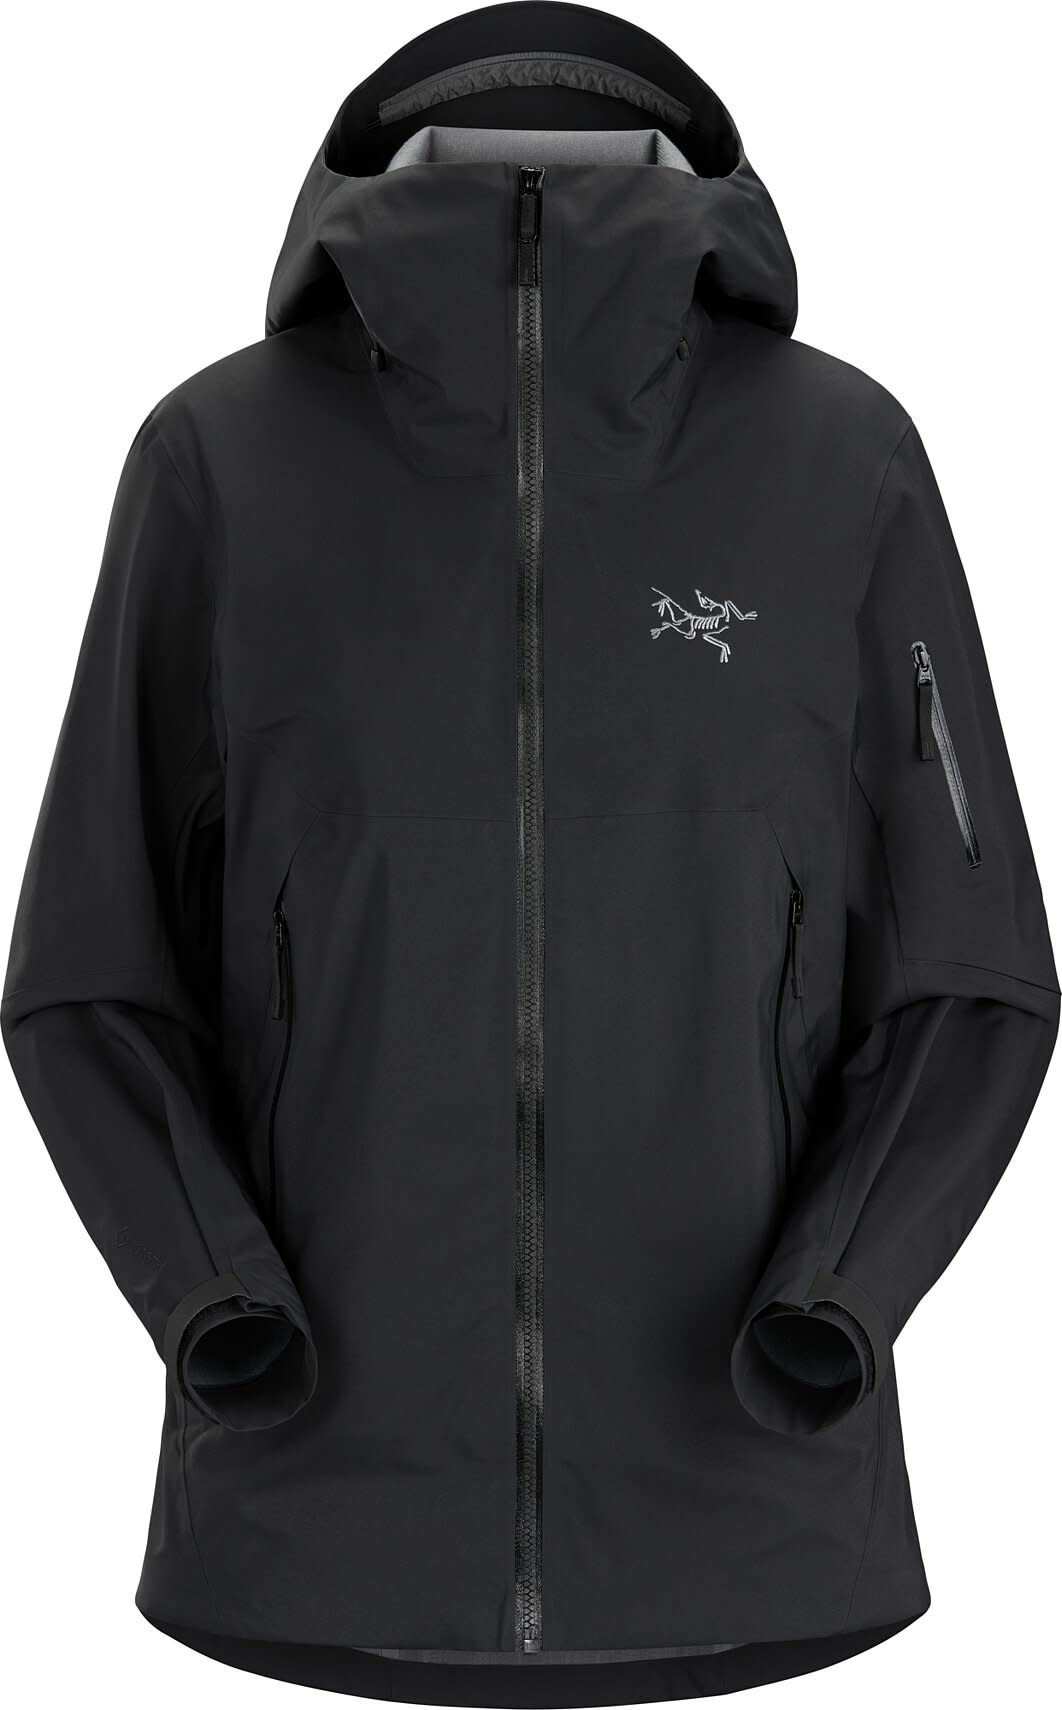 Arc'teryx Women's Sentinel Jacket Black